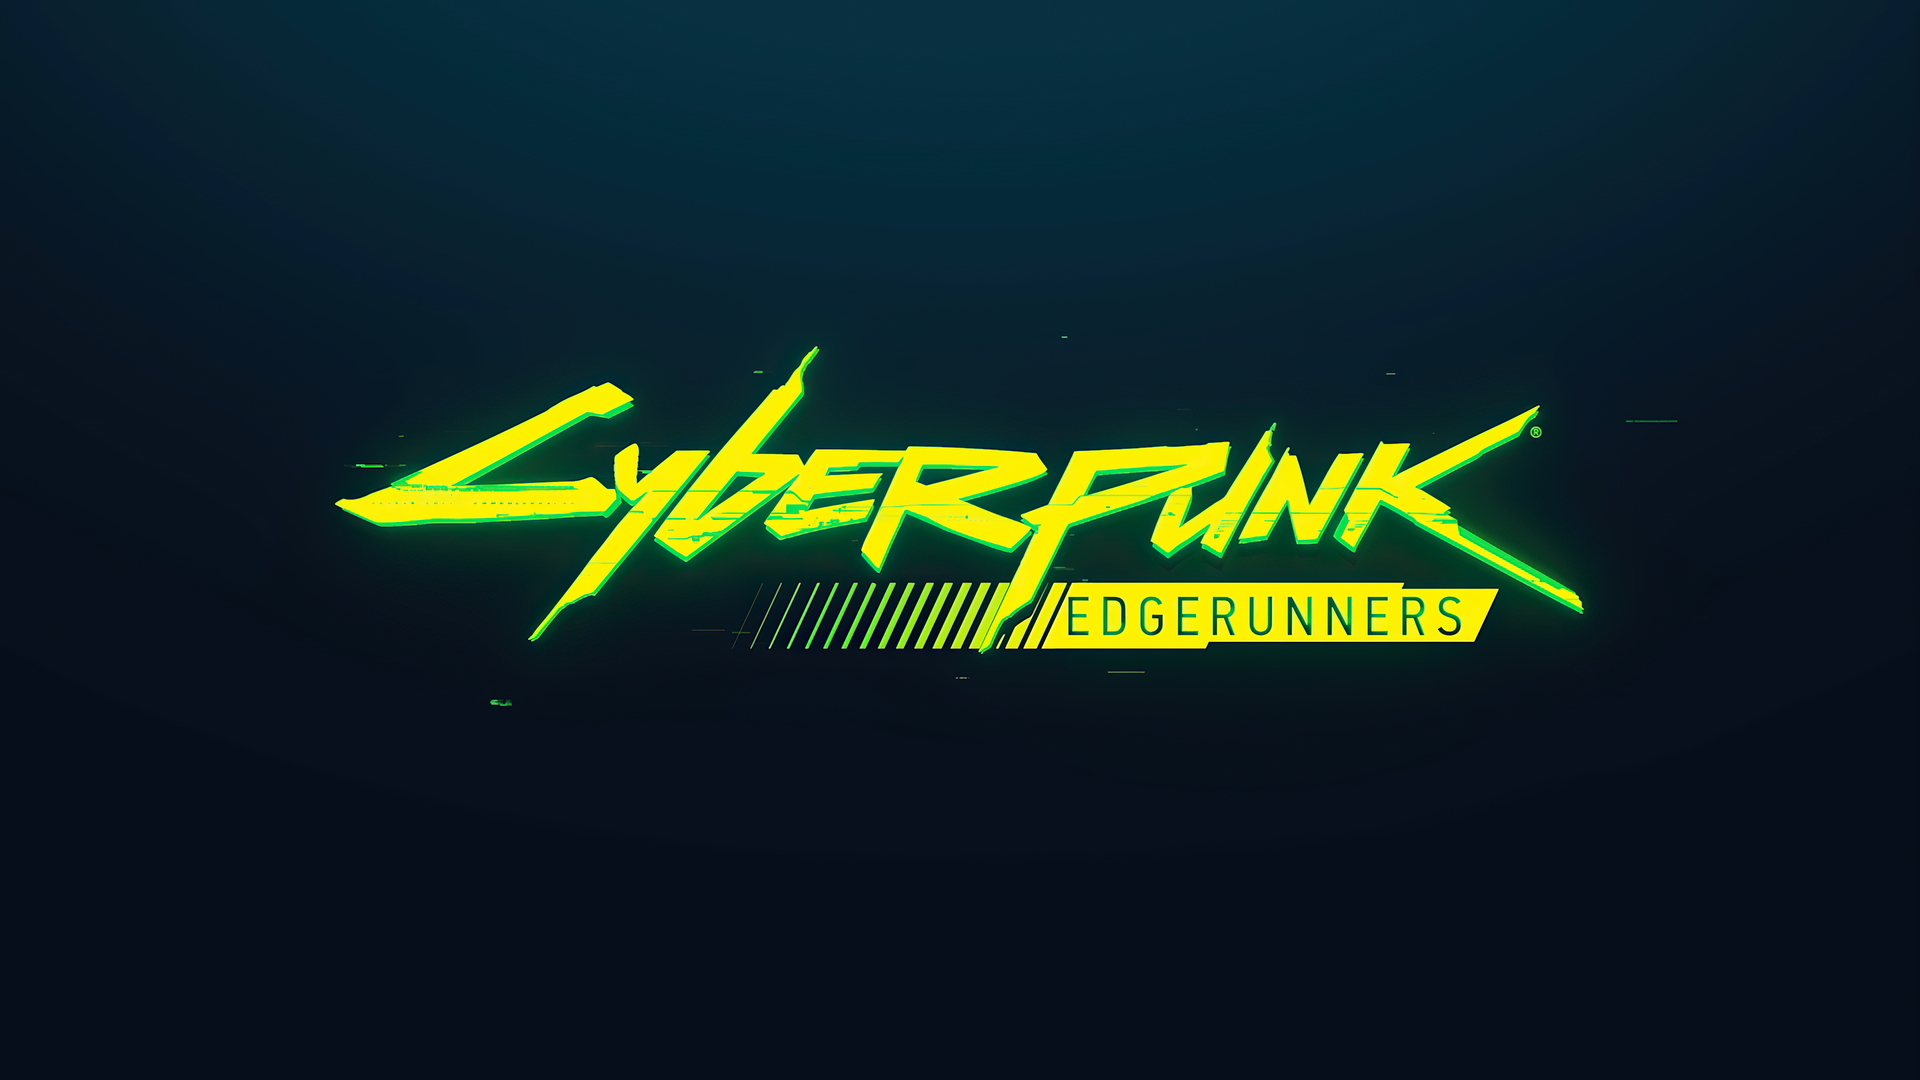 Cyberpunk logo wallpaper фото 5